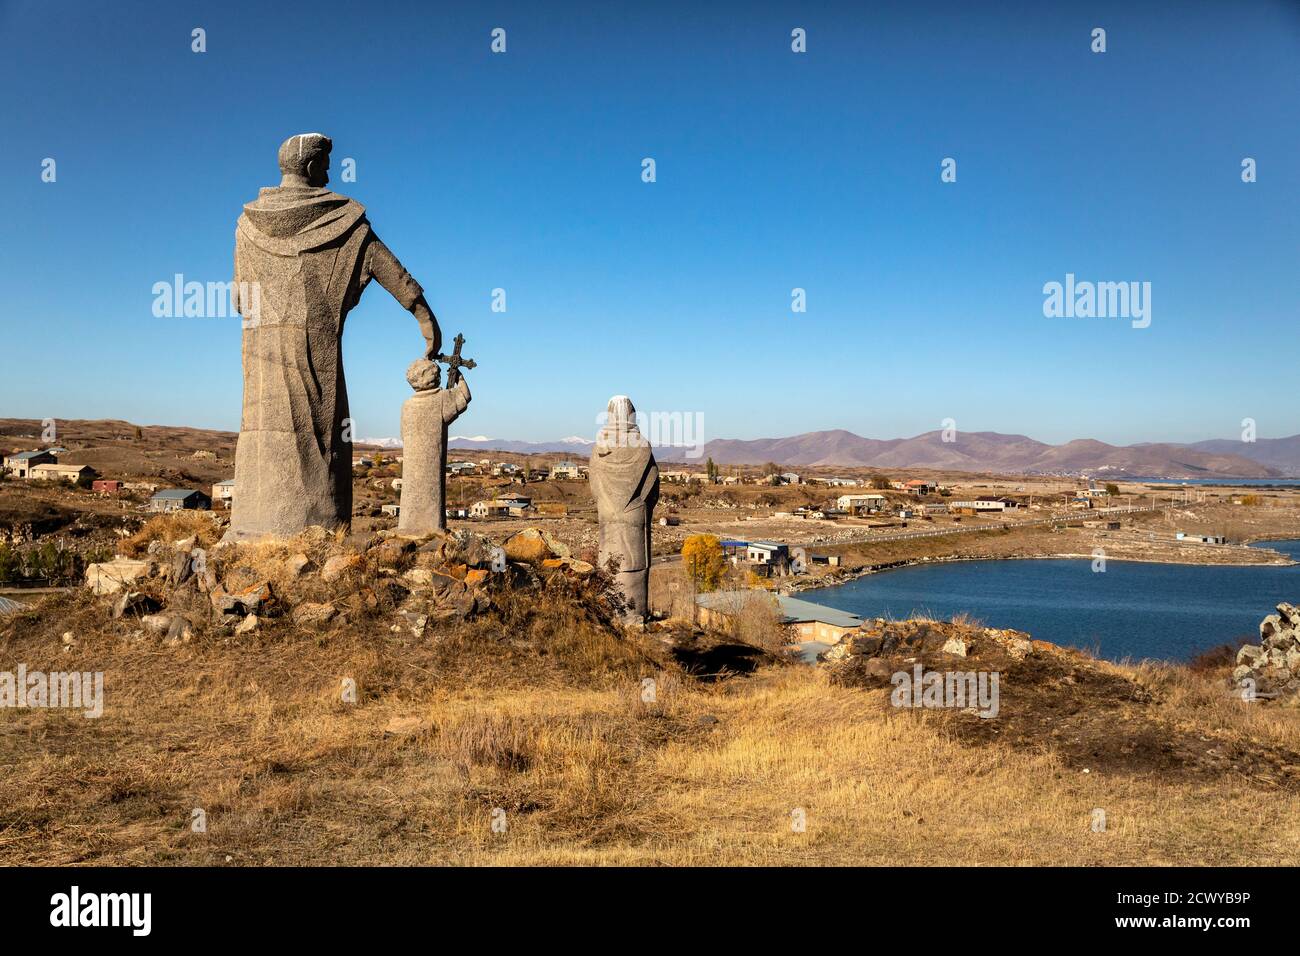 Sculptures along the road at Lake Sevan Armenia on the way from Yerevan to Nagorno-Karabakh. Stock Photo